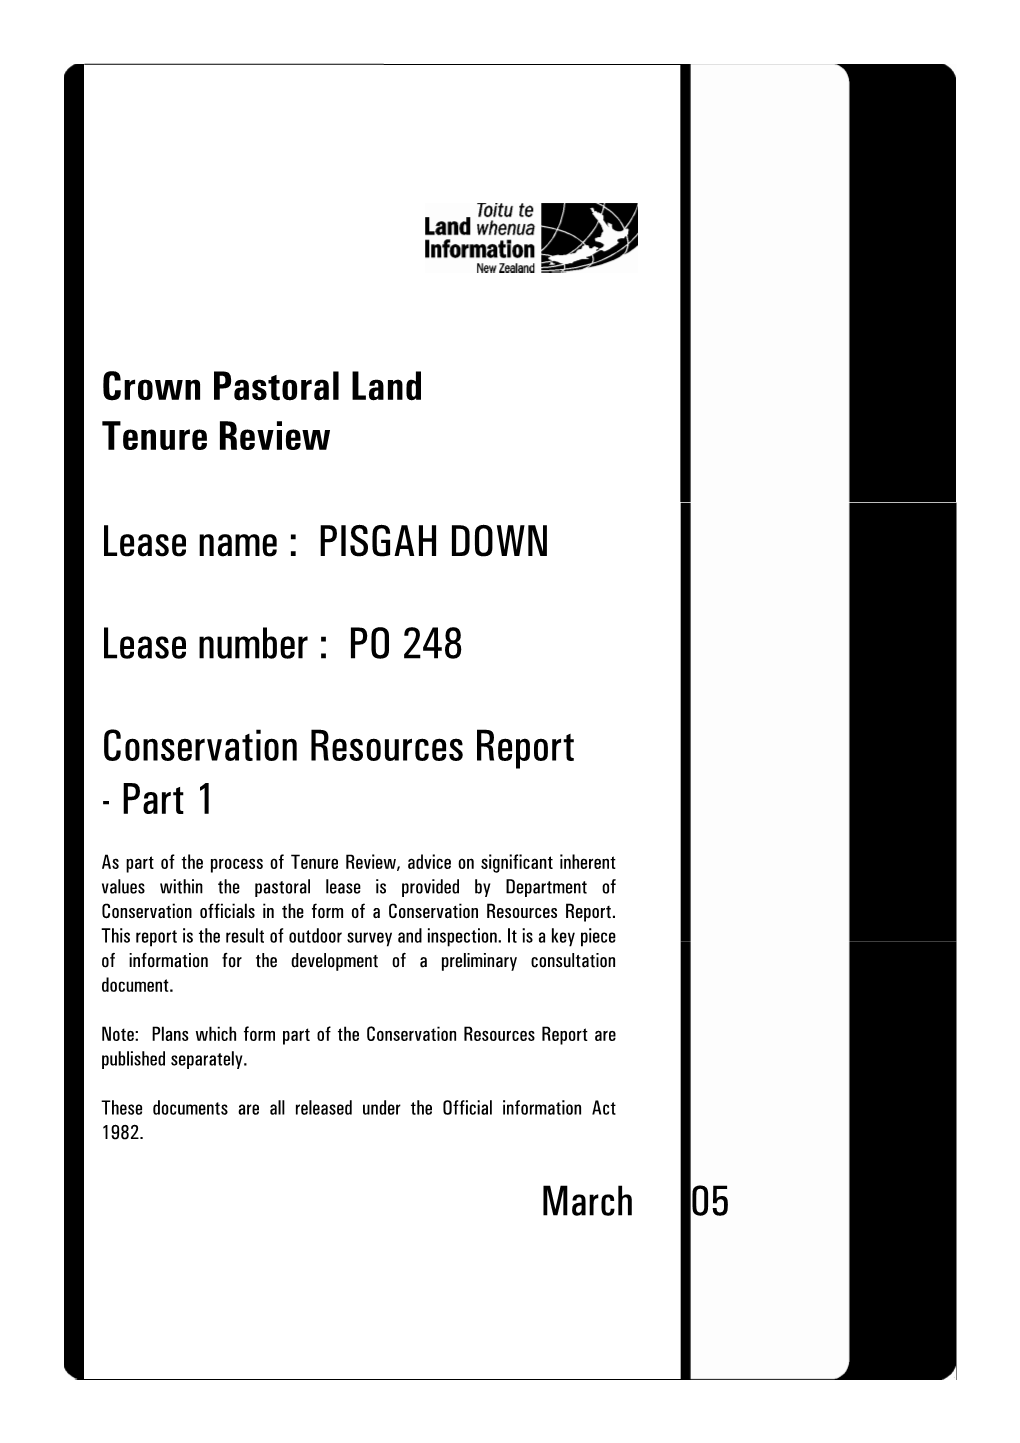 Crown Pastoral-Tenure Review-Pisgah-Down-Conservation Resources Report Part1